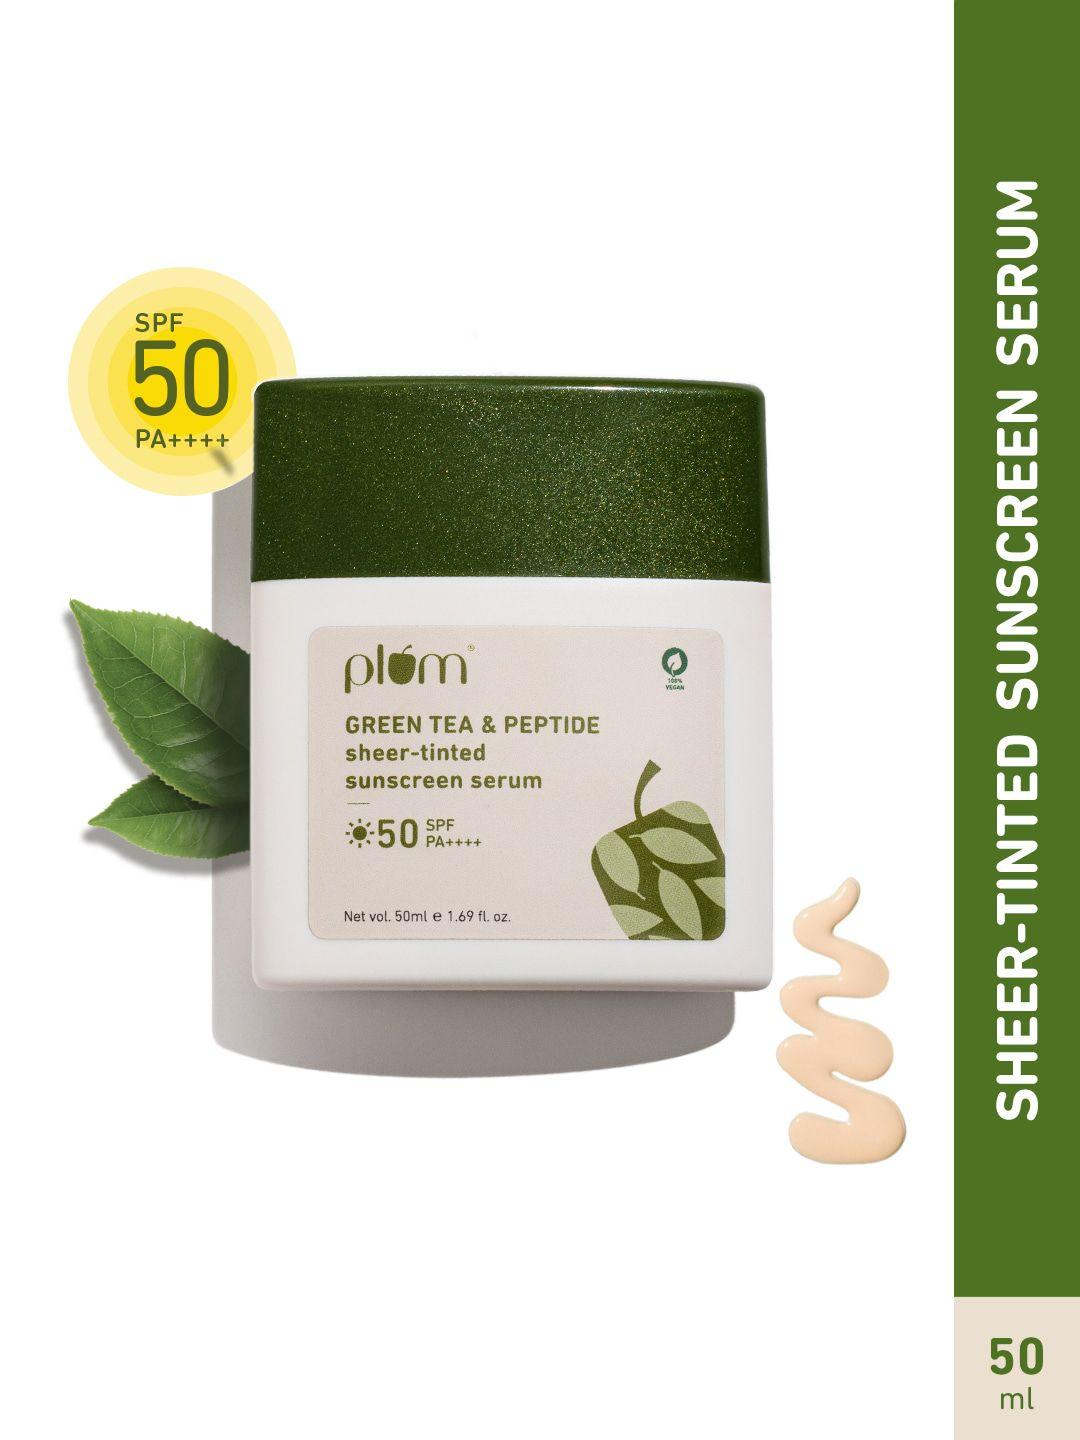 plum green tea & peptide sheer-tinted sunscreen serum with spf 50 & pa++++ - 50ml